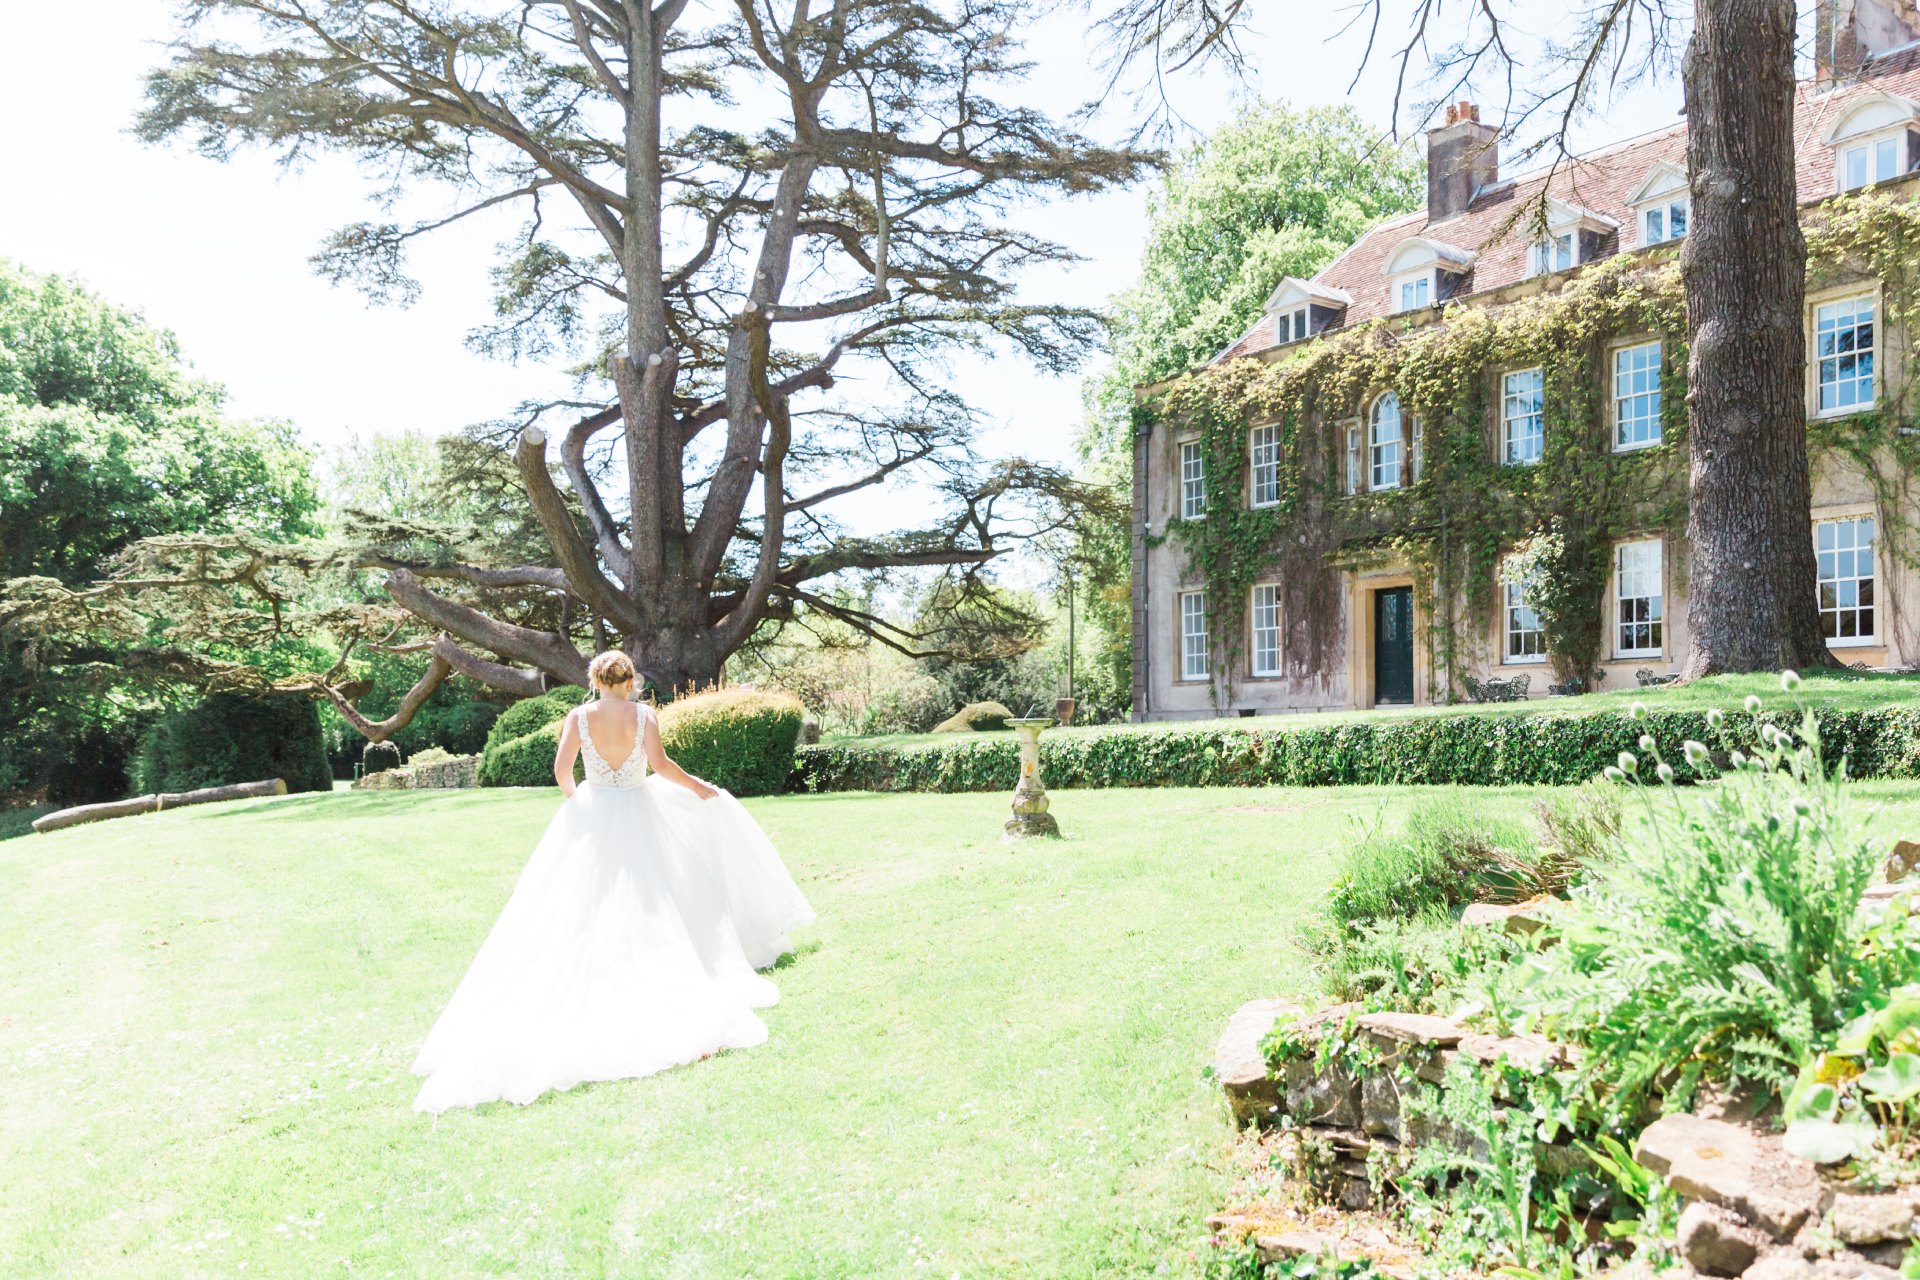 Exclusive wedding venue in Somerset with gardens